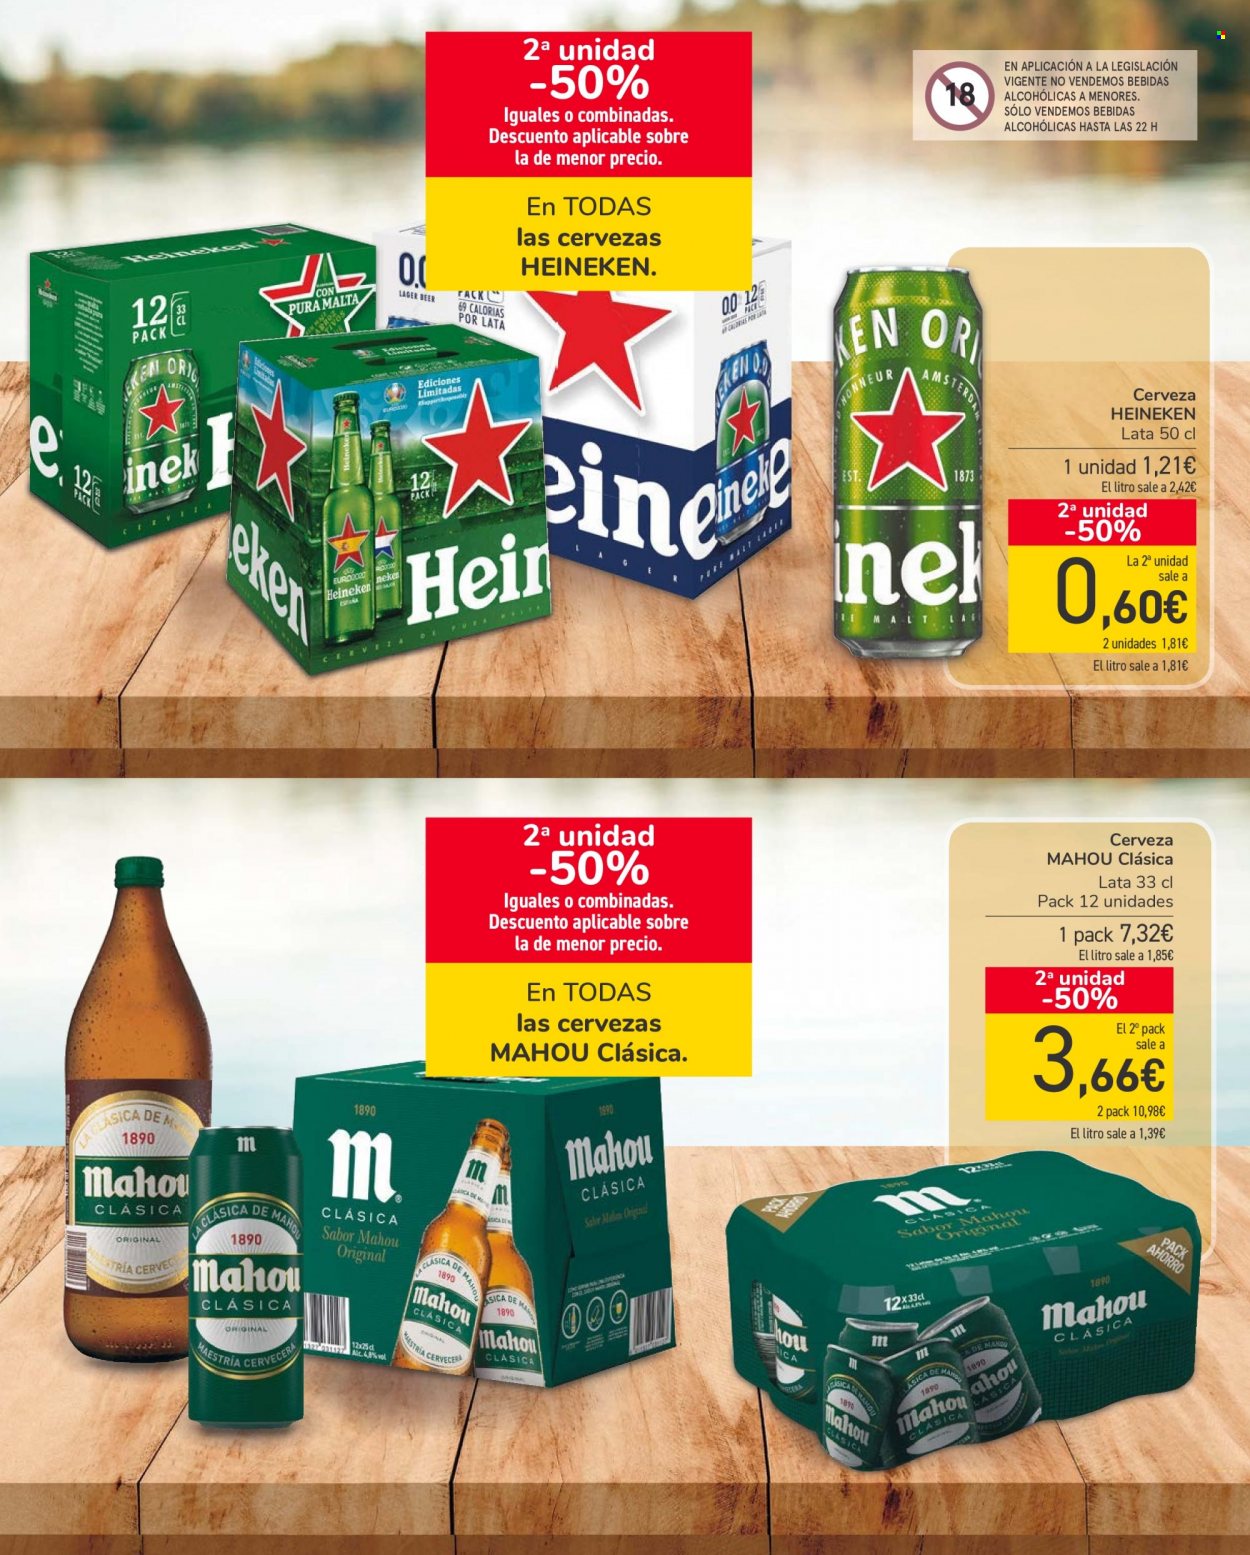 thumbnail - Folleto actual Carrefour - 18/01/22 - 27/01/22 - Ventas - Heineken, Mahou, bebida, bebida alcohólica. Página 45.